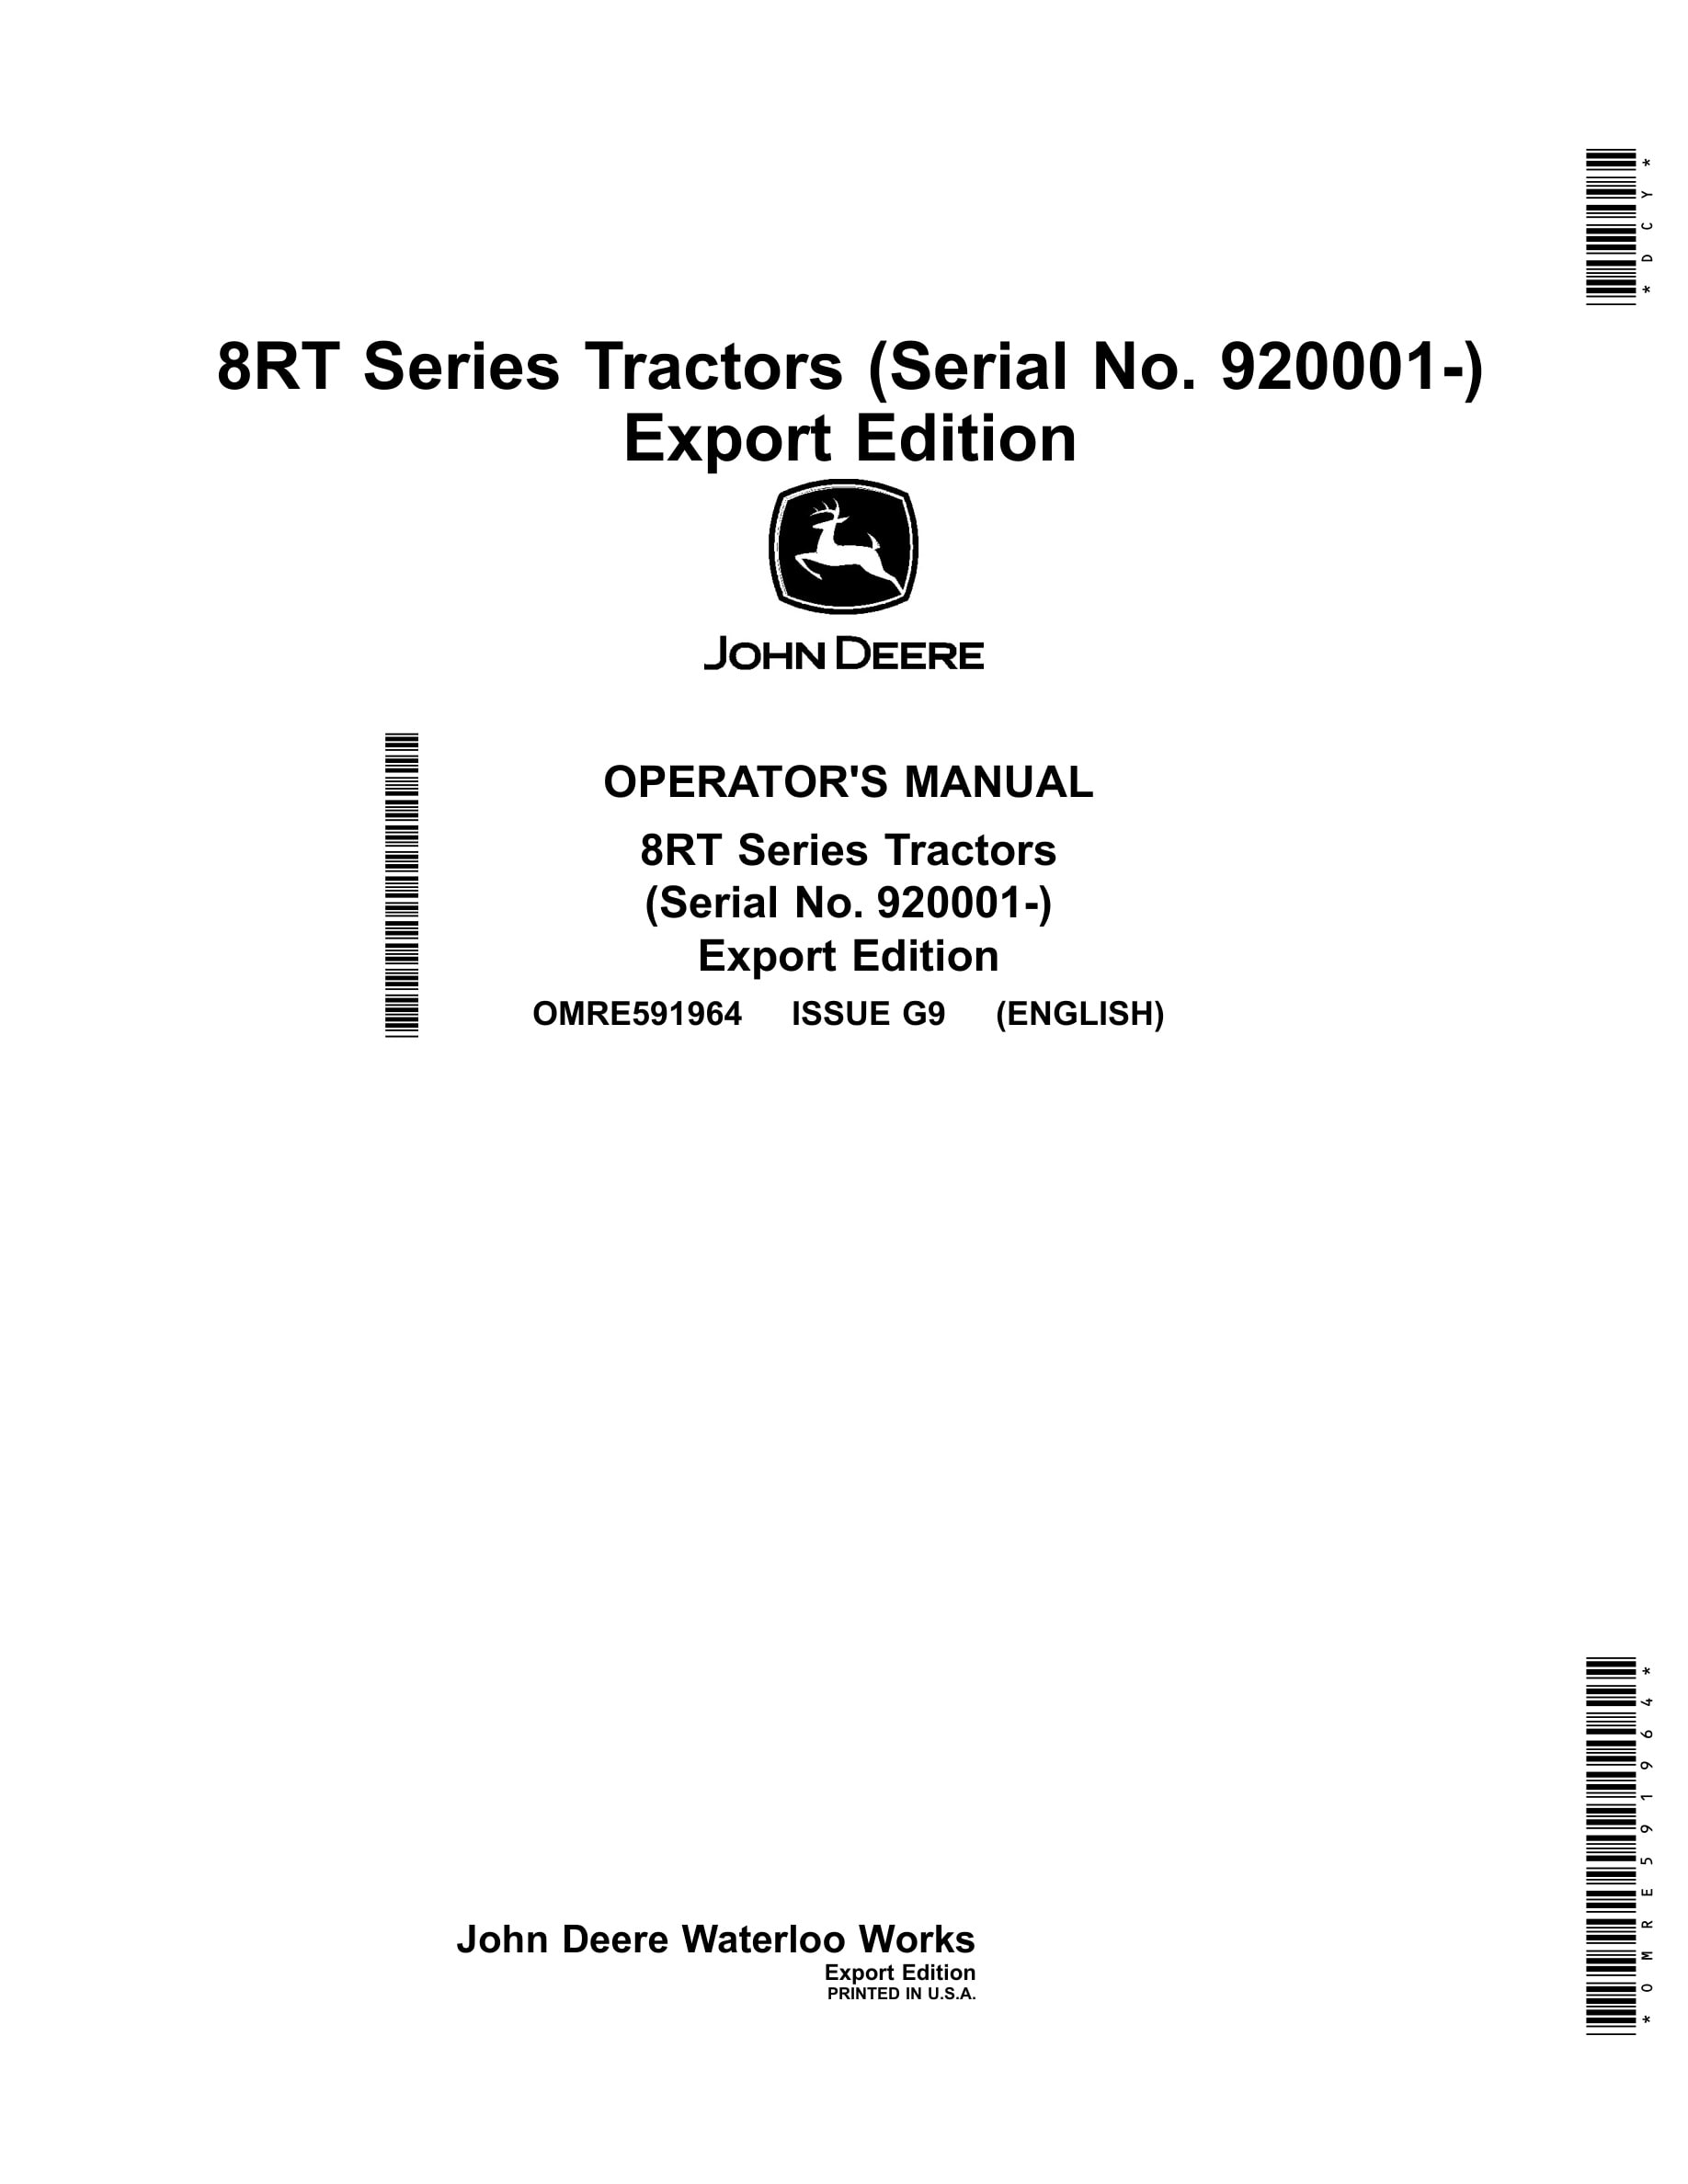 John Deere 8rt Series Tractors Operator Manuals OMRE591964-1